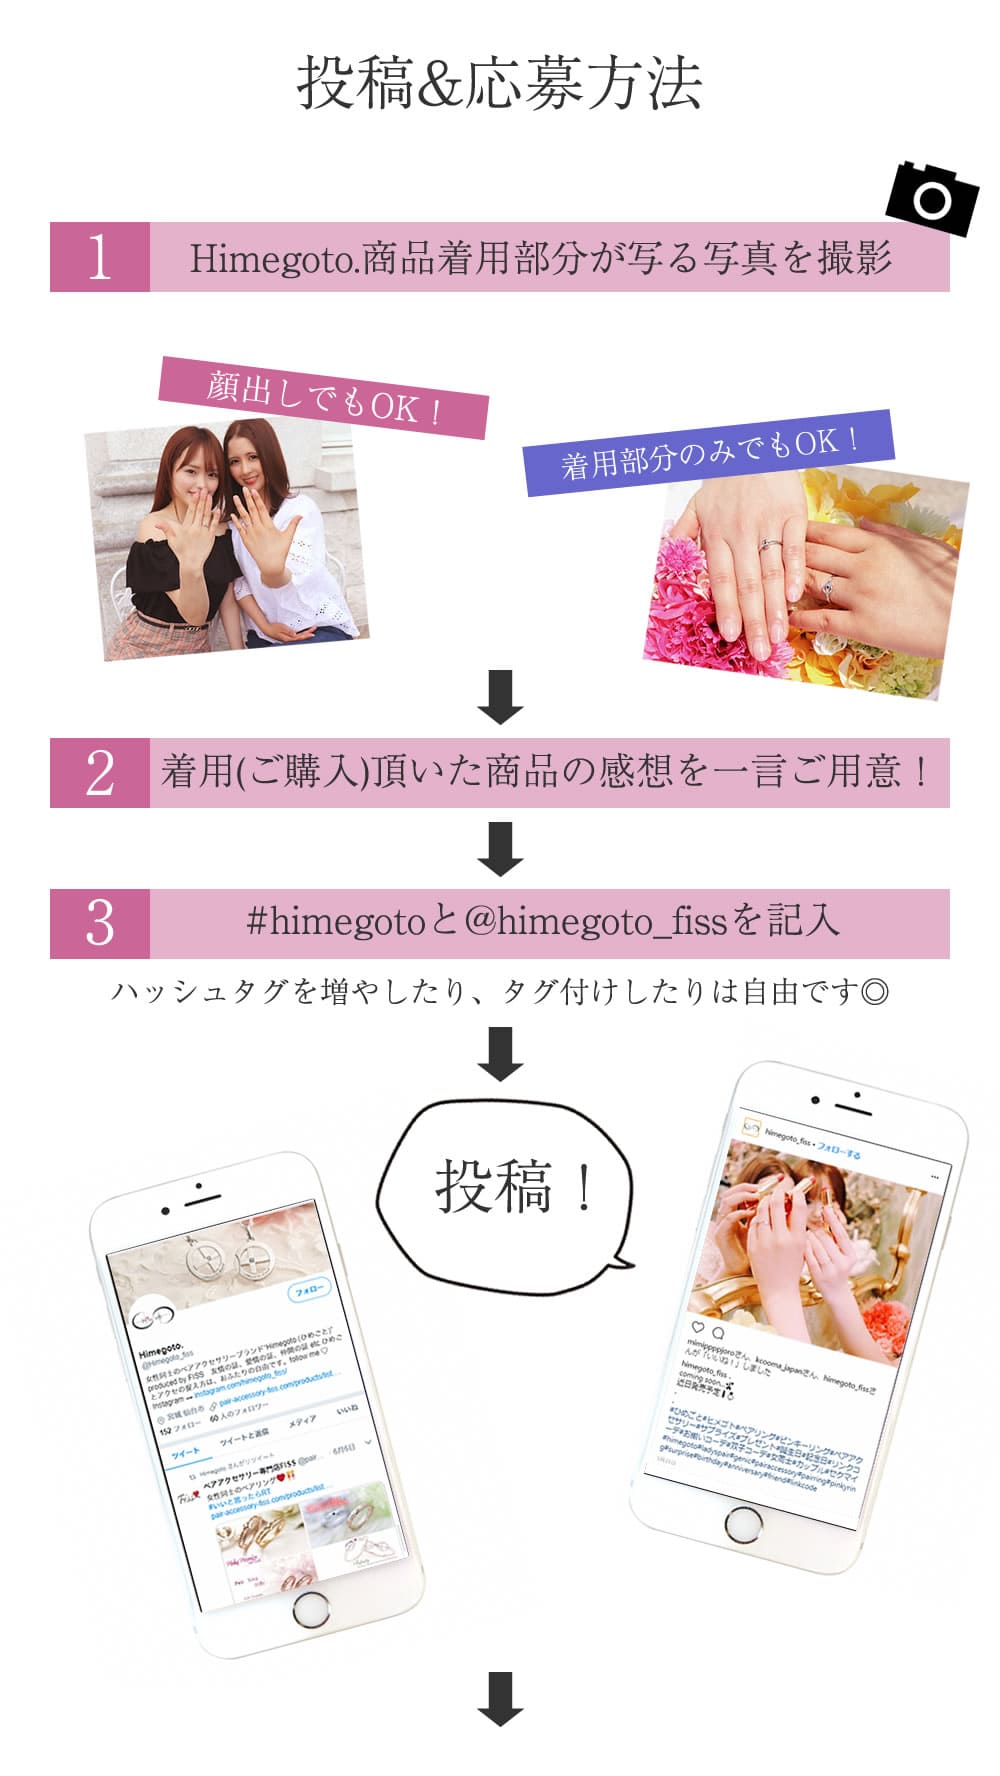 Himegoto SNSキャンペーン